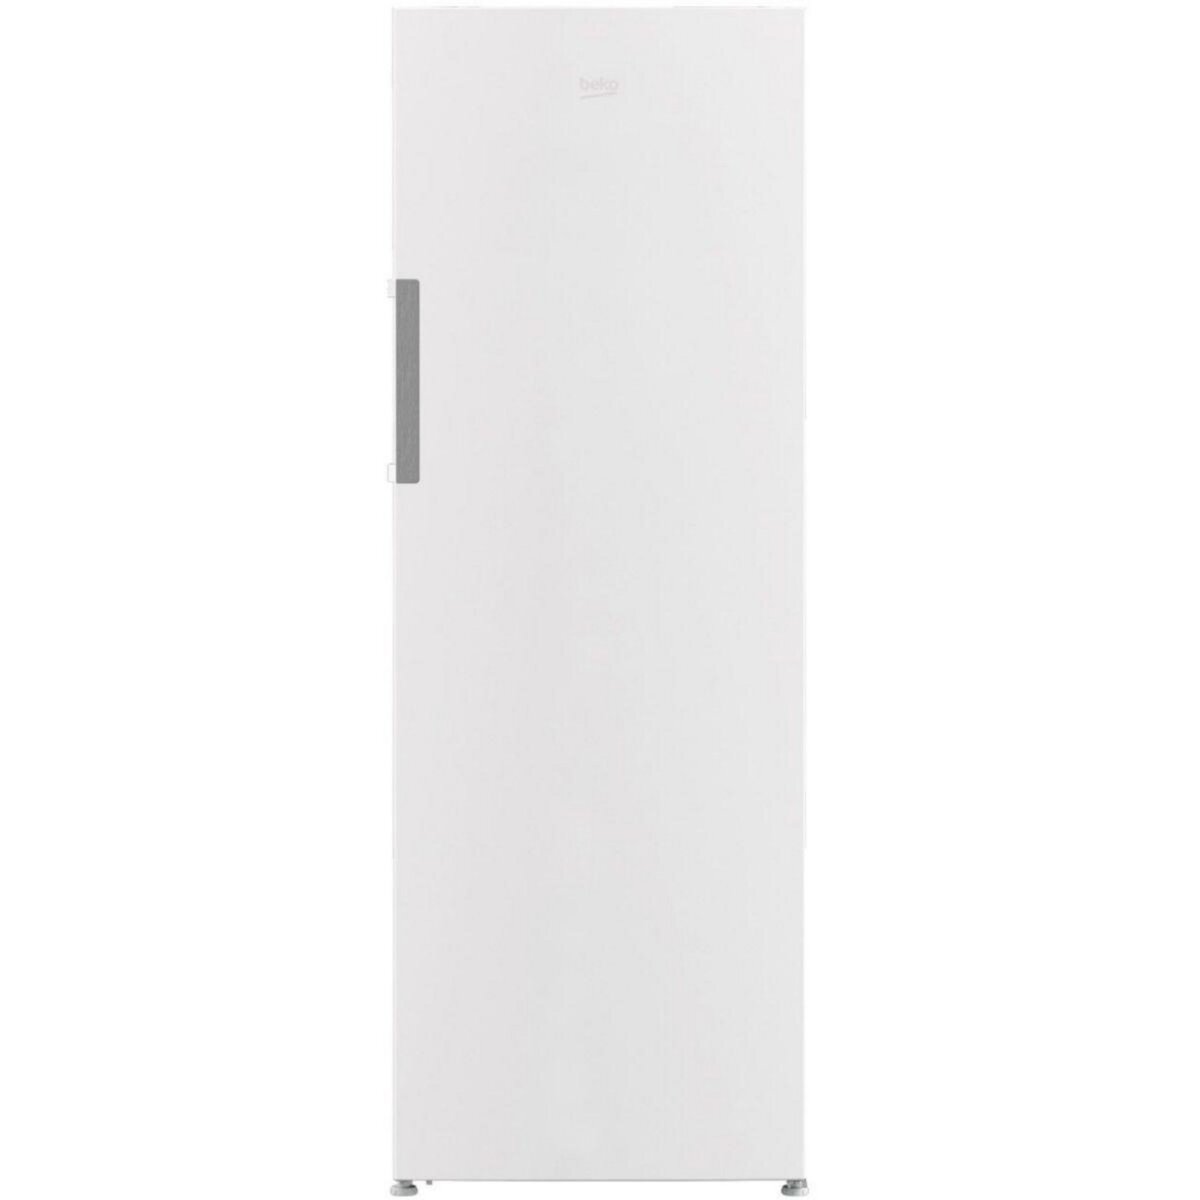 GORENJE Réfrigérateur 1 porte OBRB615DBK pas cher 